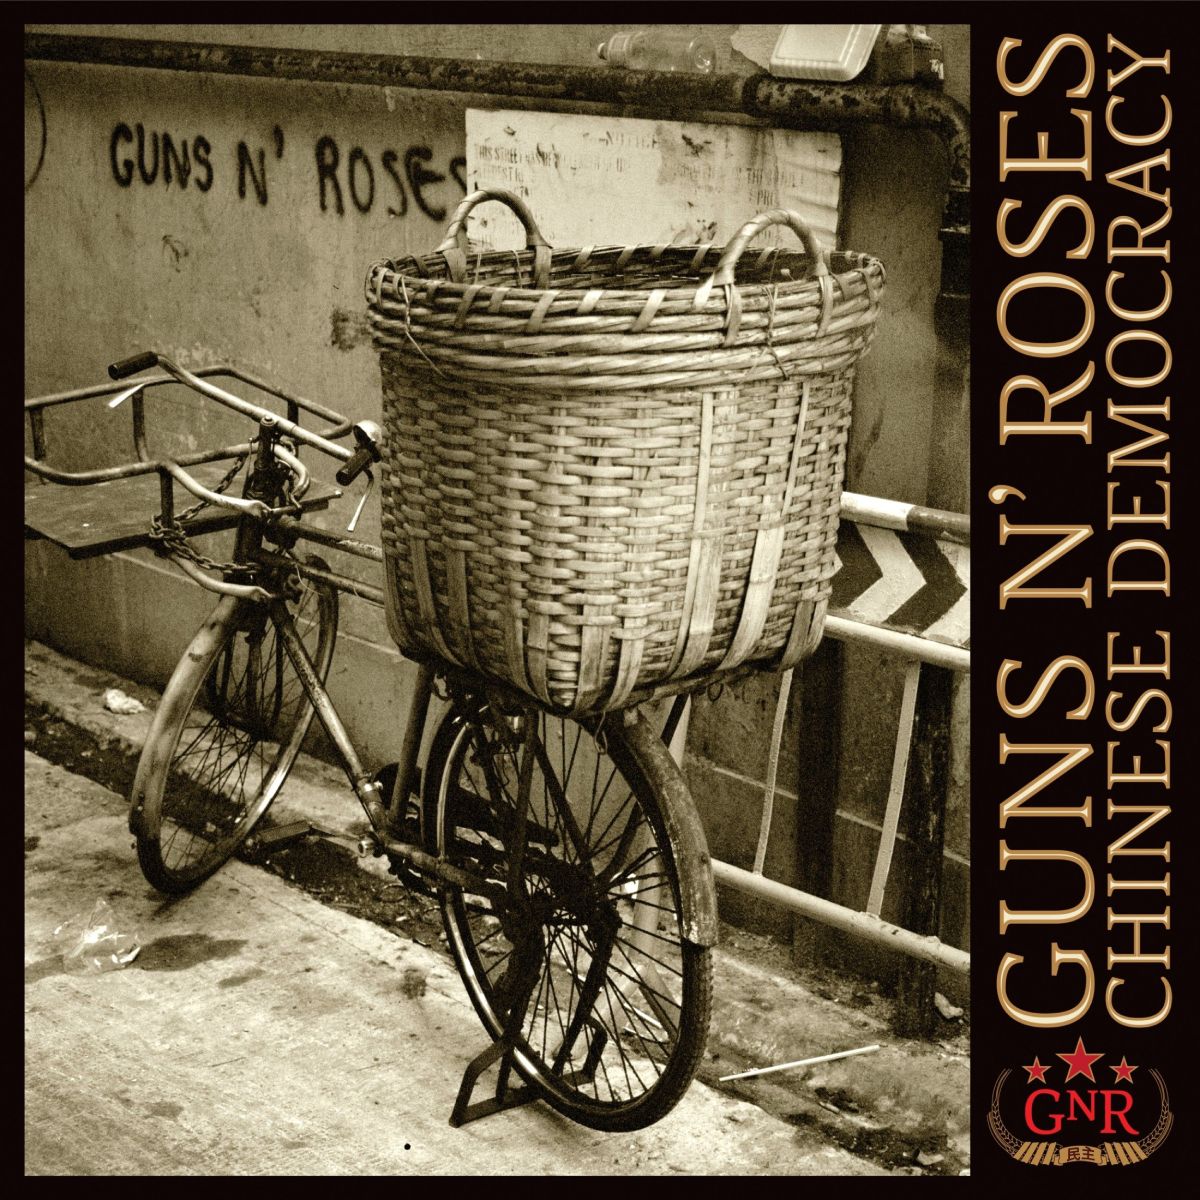 Guns N' Roses, álbum "Chinese Democracy" (Democracia Chinesa)